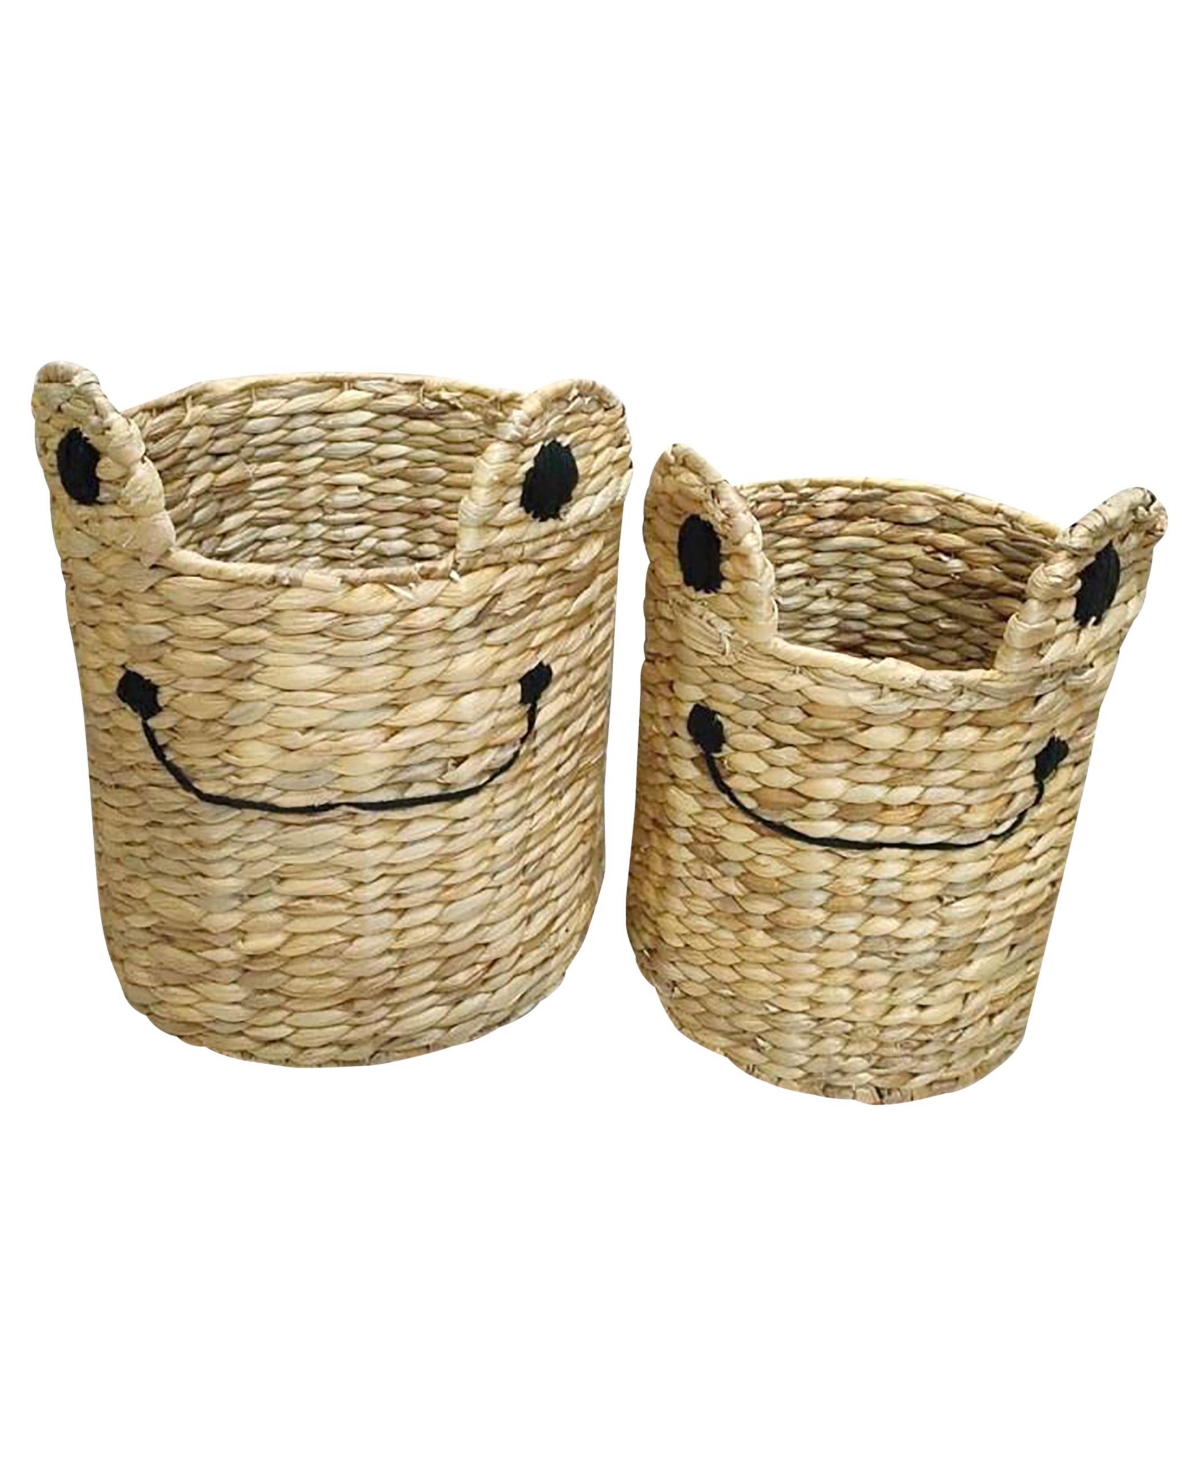 Round Untapered Frog Baskets, Set of 2 - Natural